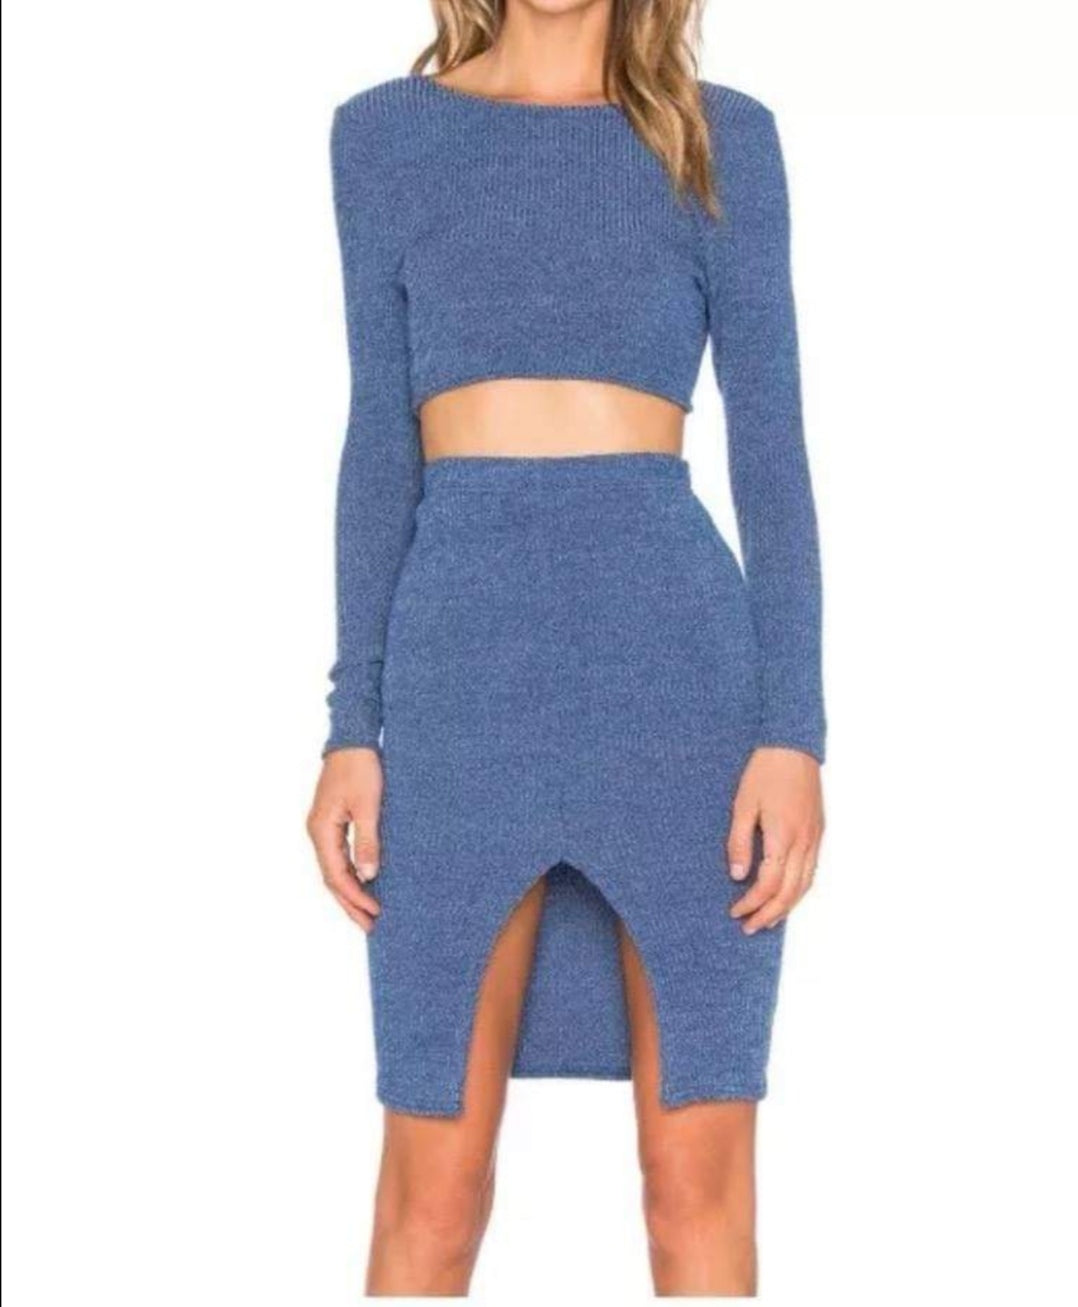 Toby Heart Ginger Co-Ord skirt crop top set blue